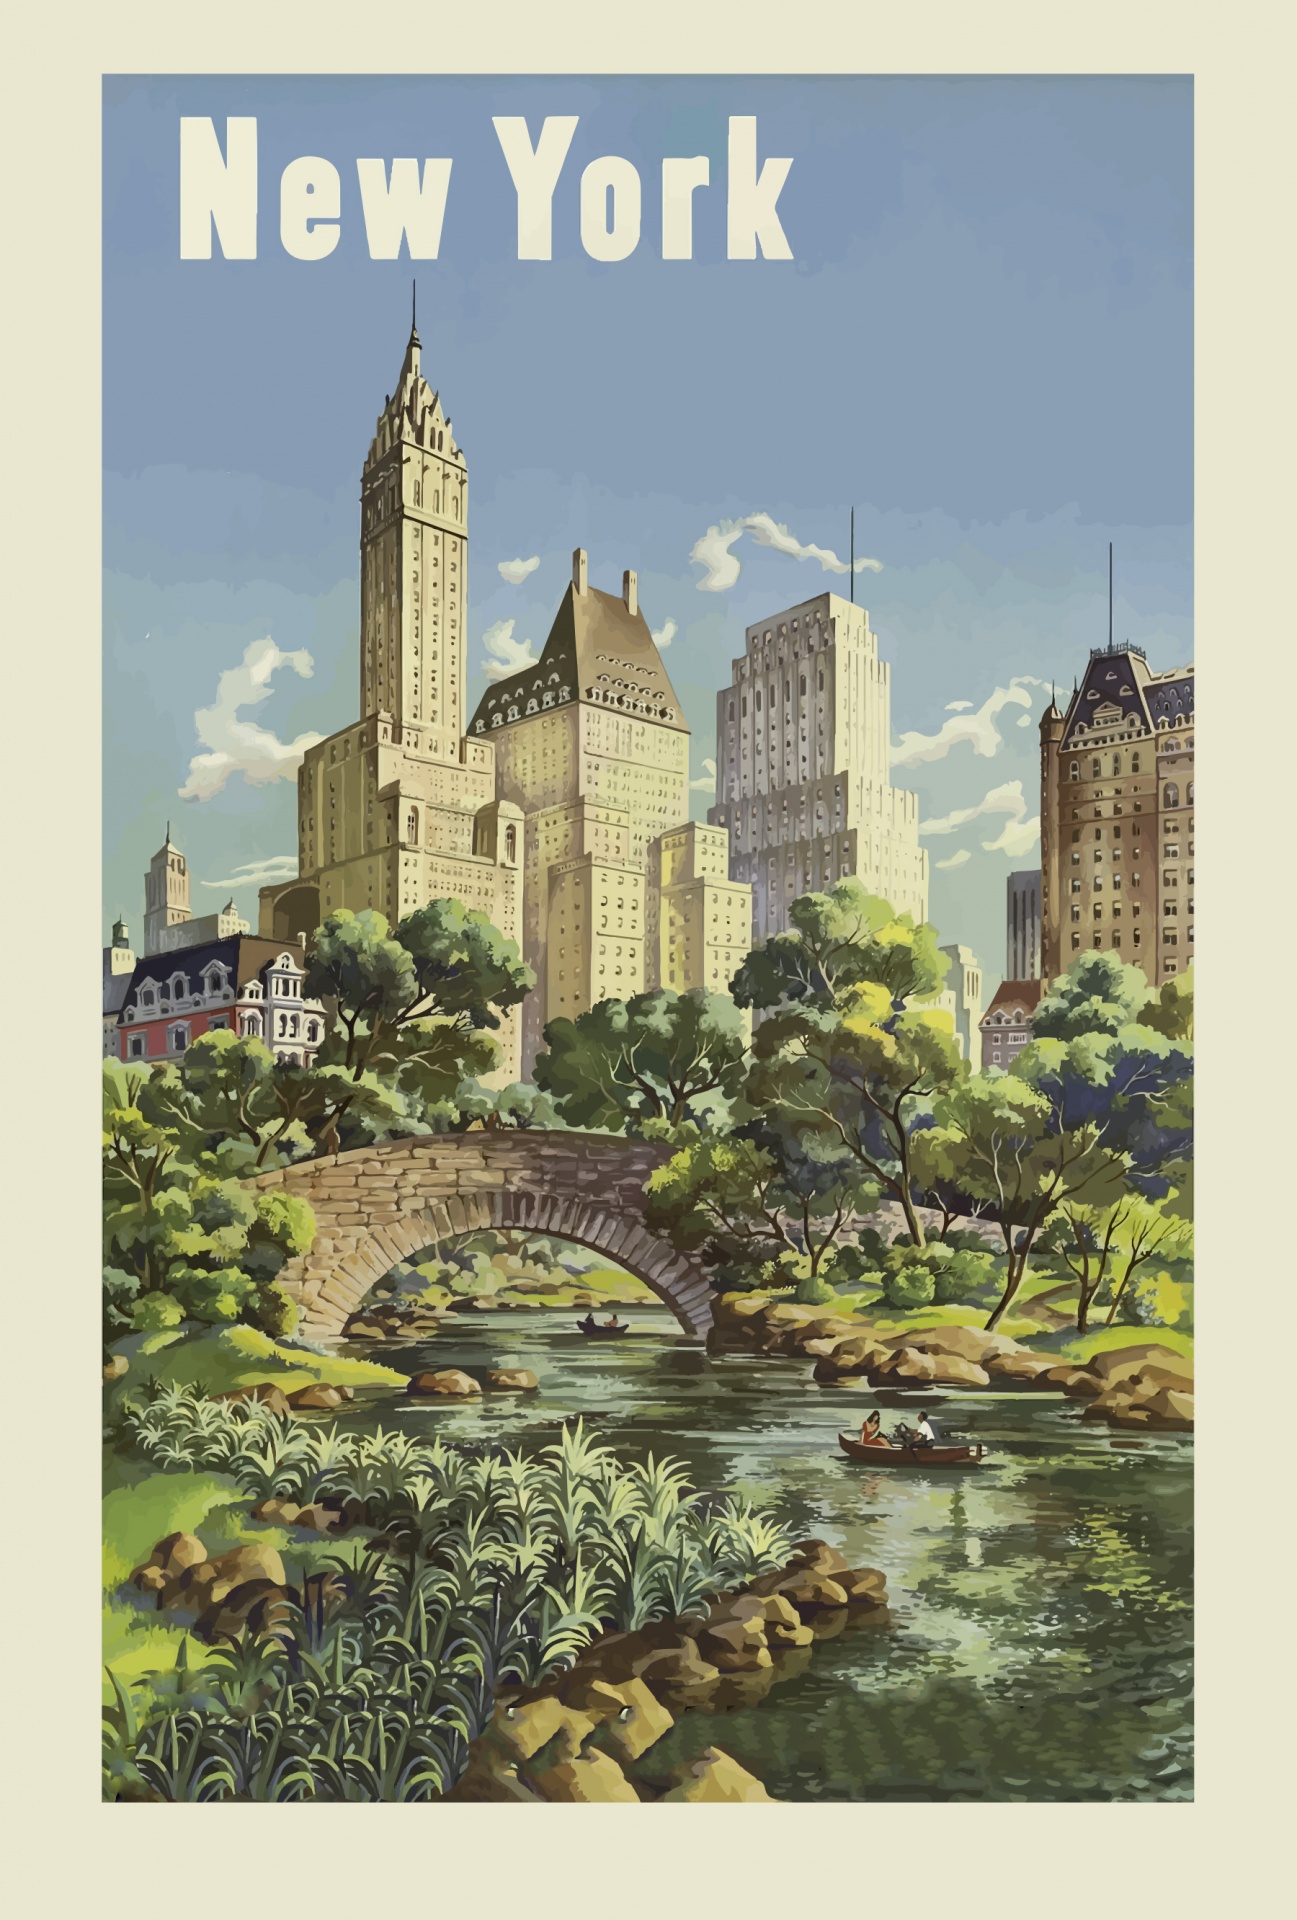 Tappning reser affischen New York